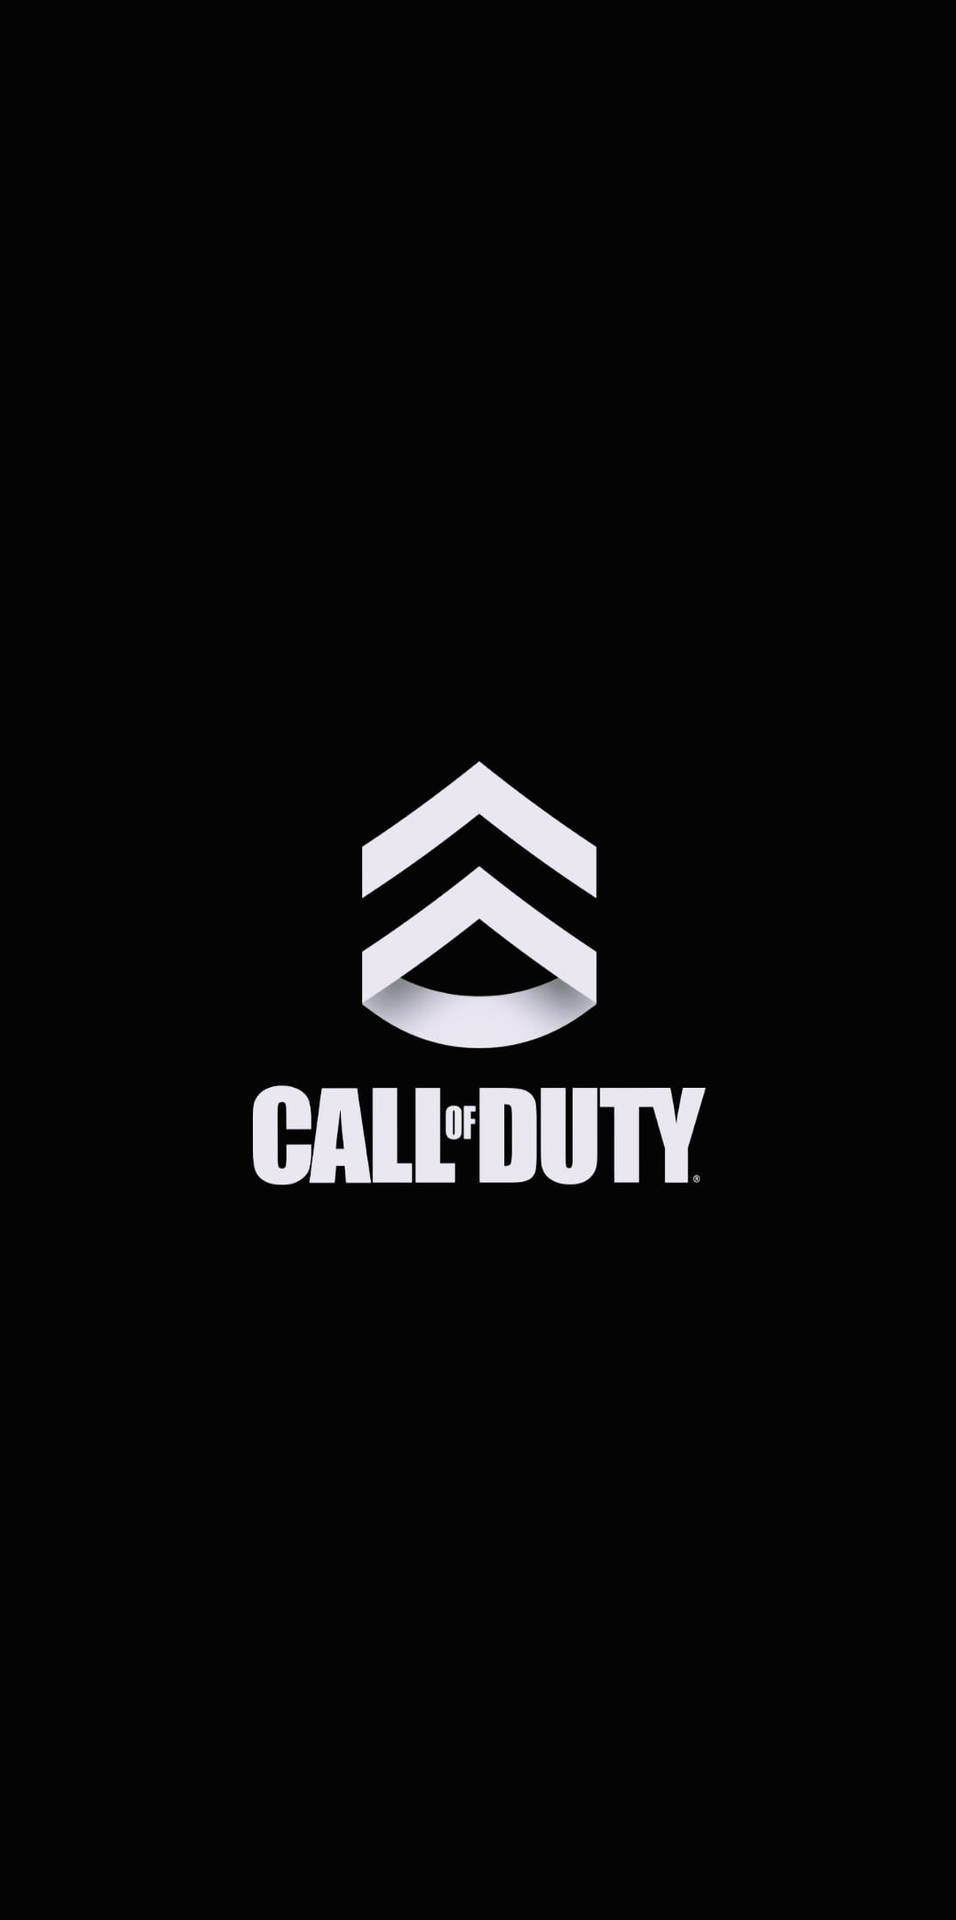 Call Of Duty Gaming Logo Wallpaper